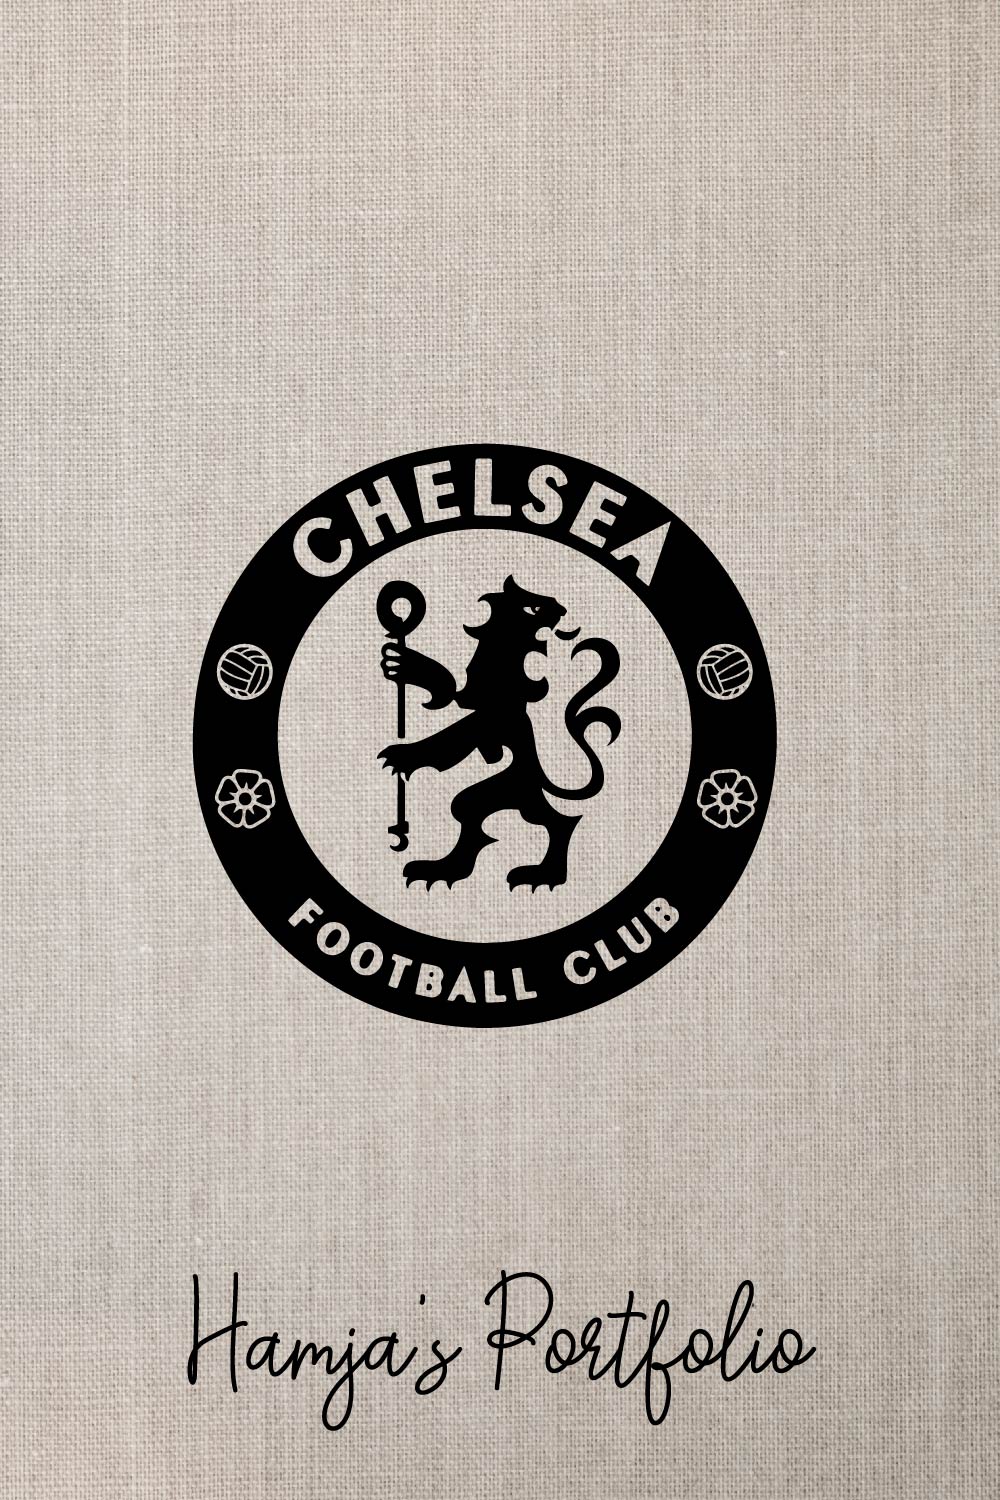 Chelsea Football Club Logo Vector Set pinterest preview image.